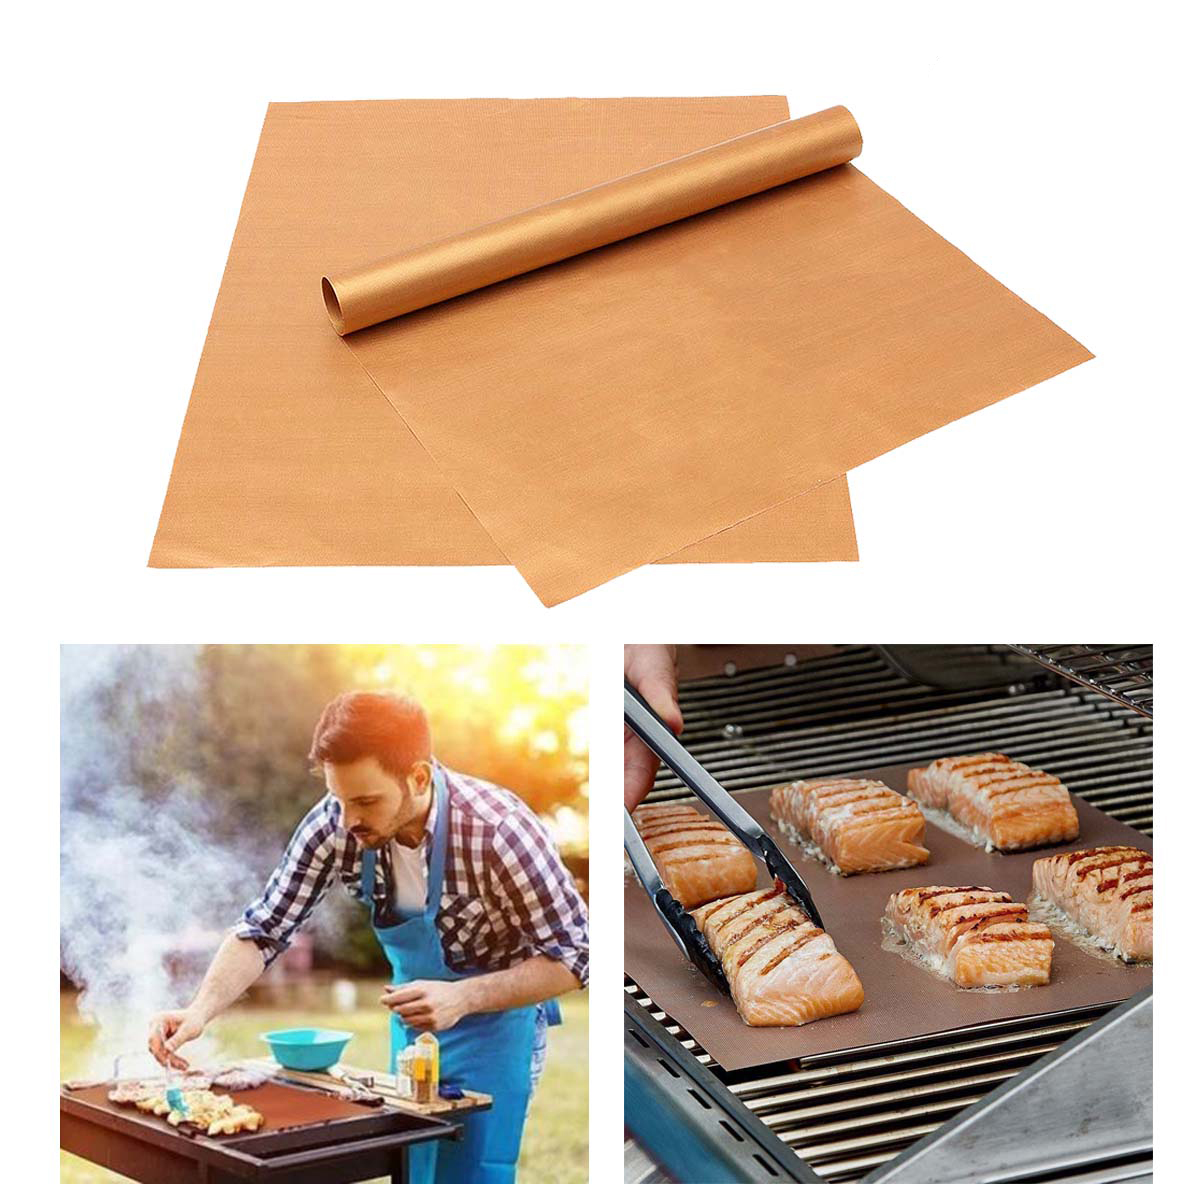 

IPRee™ 4PCS Outdoor Picnic BBQ Grill Mat Camping Non-stick Reusable Bake Pad Tool